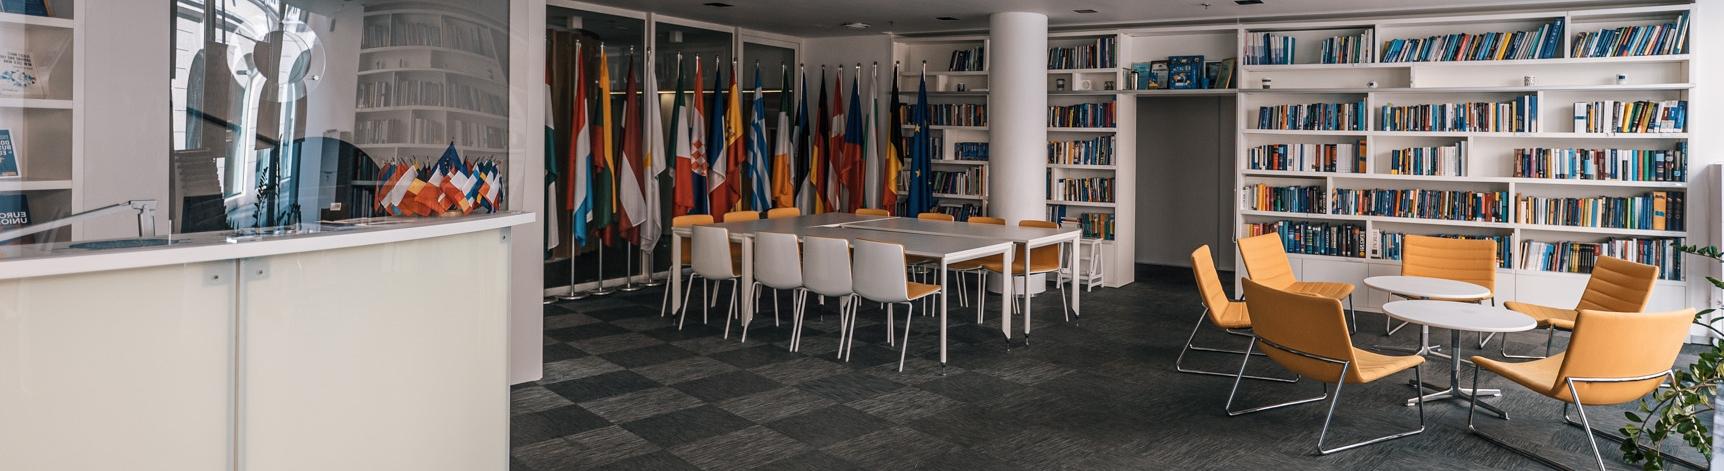 Europos informacijos centro interjeras (apkarpytas)